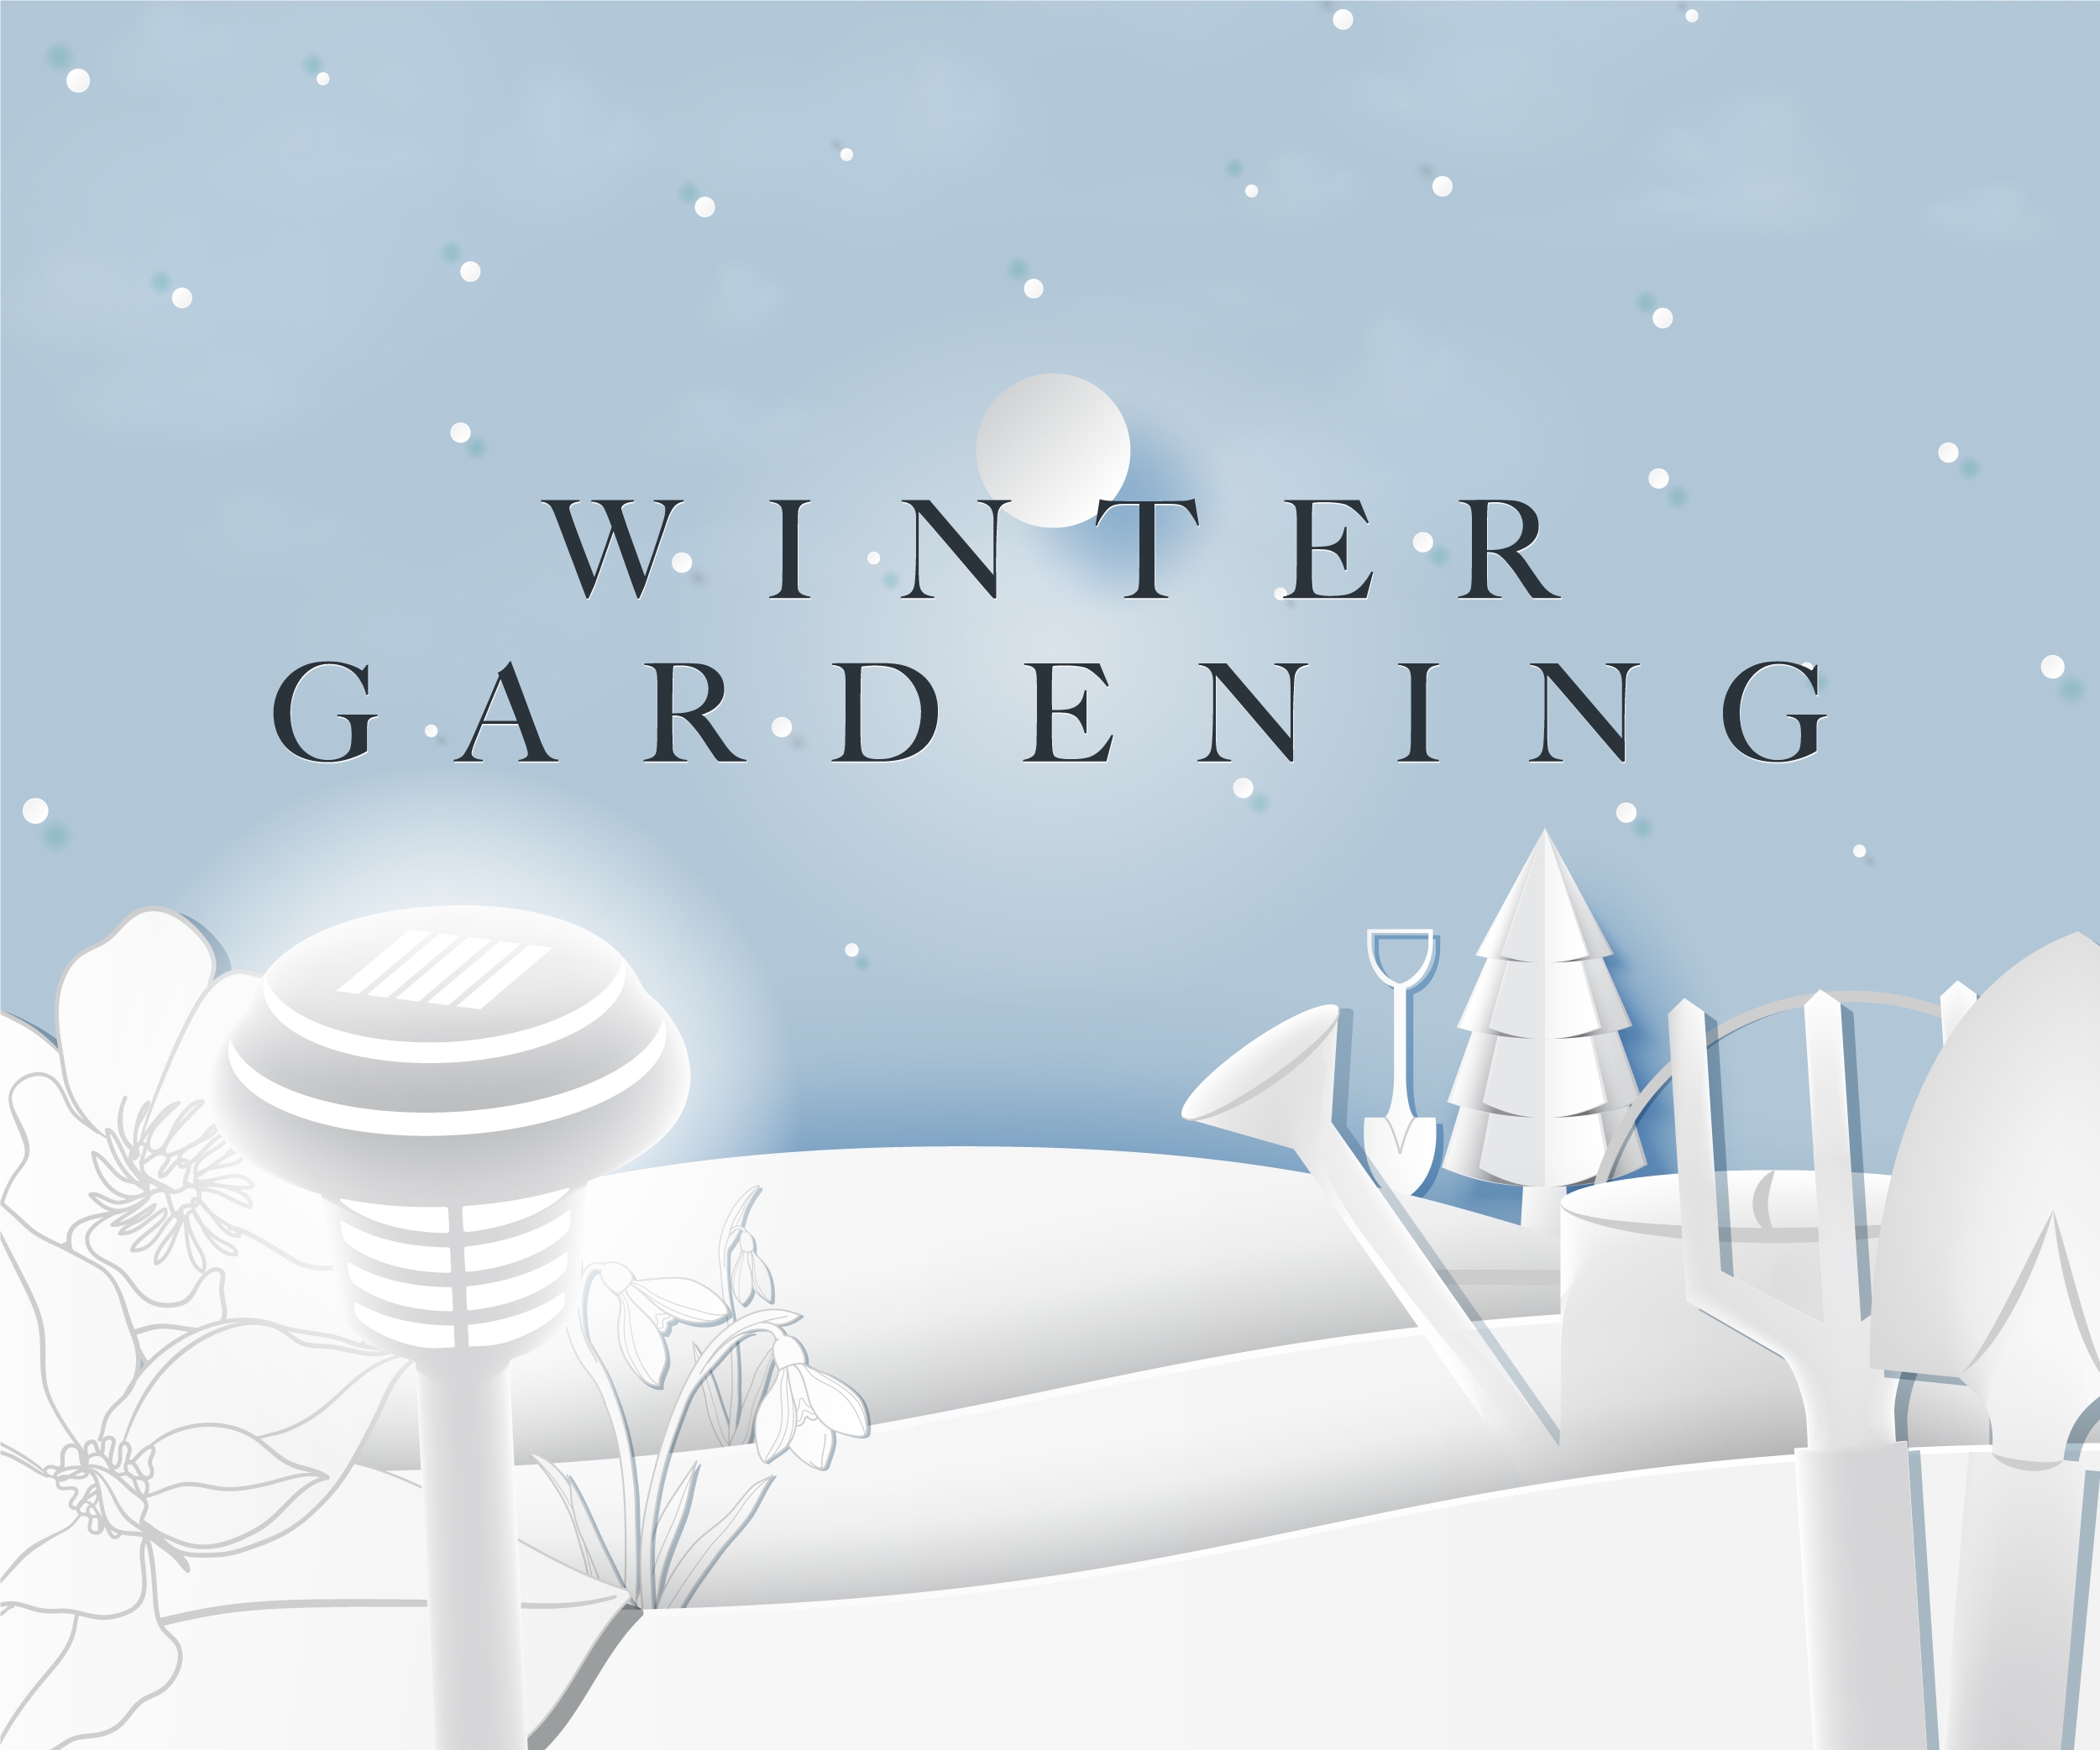 Winter Gardening Image 